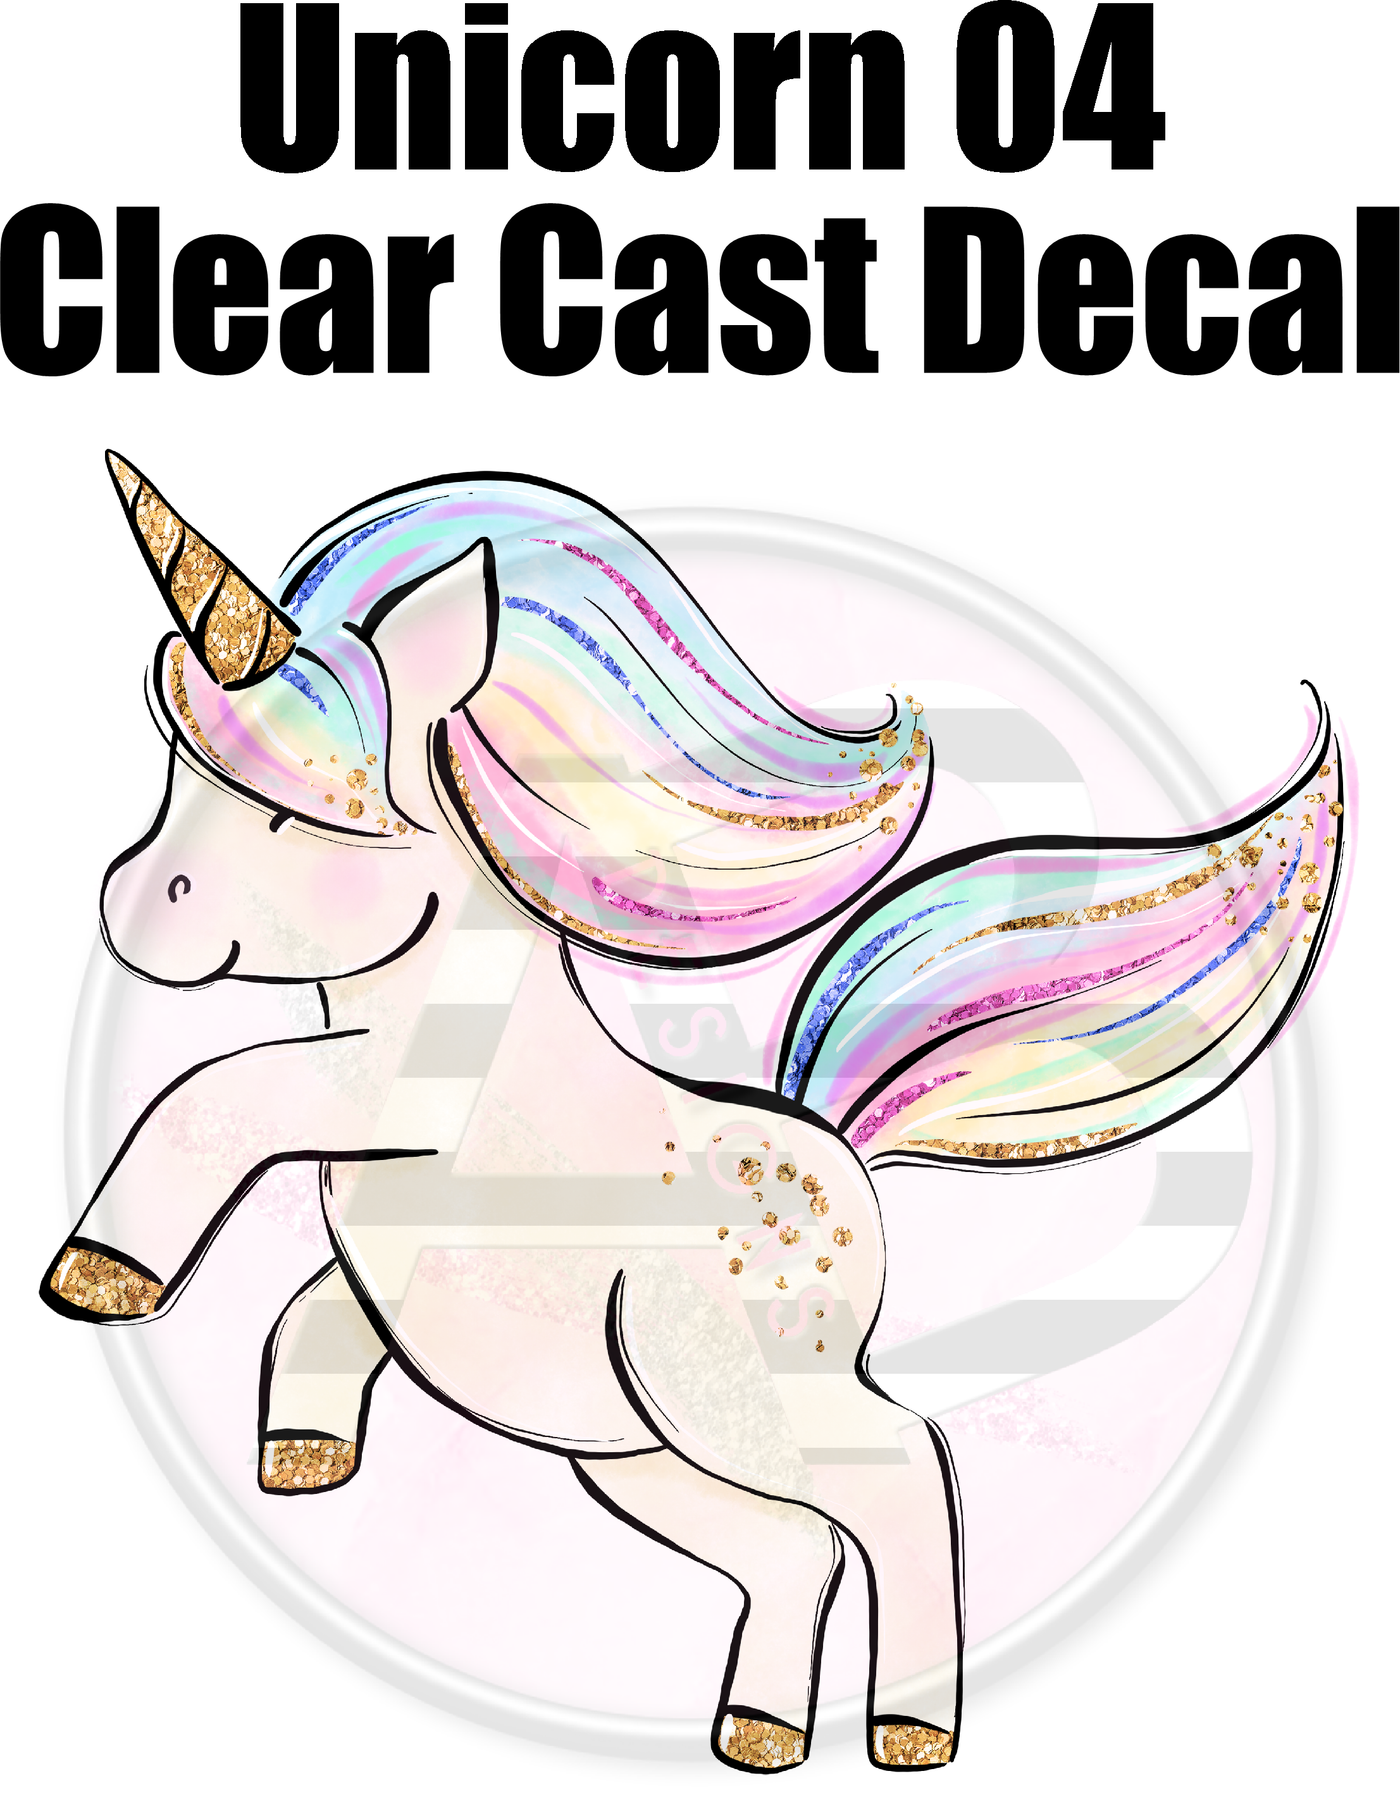 Unicorn 04 - Clear Cast Decal